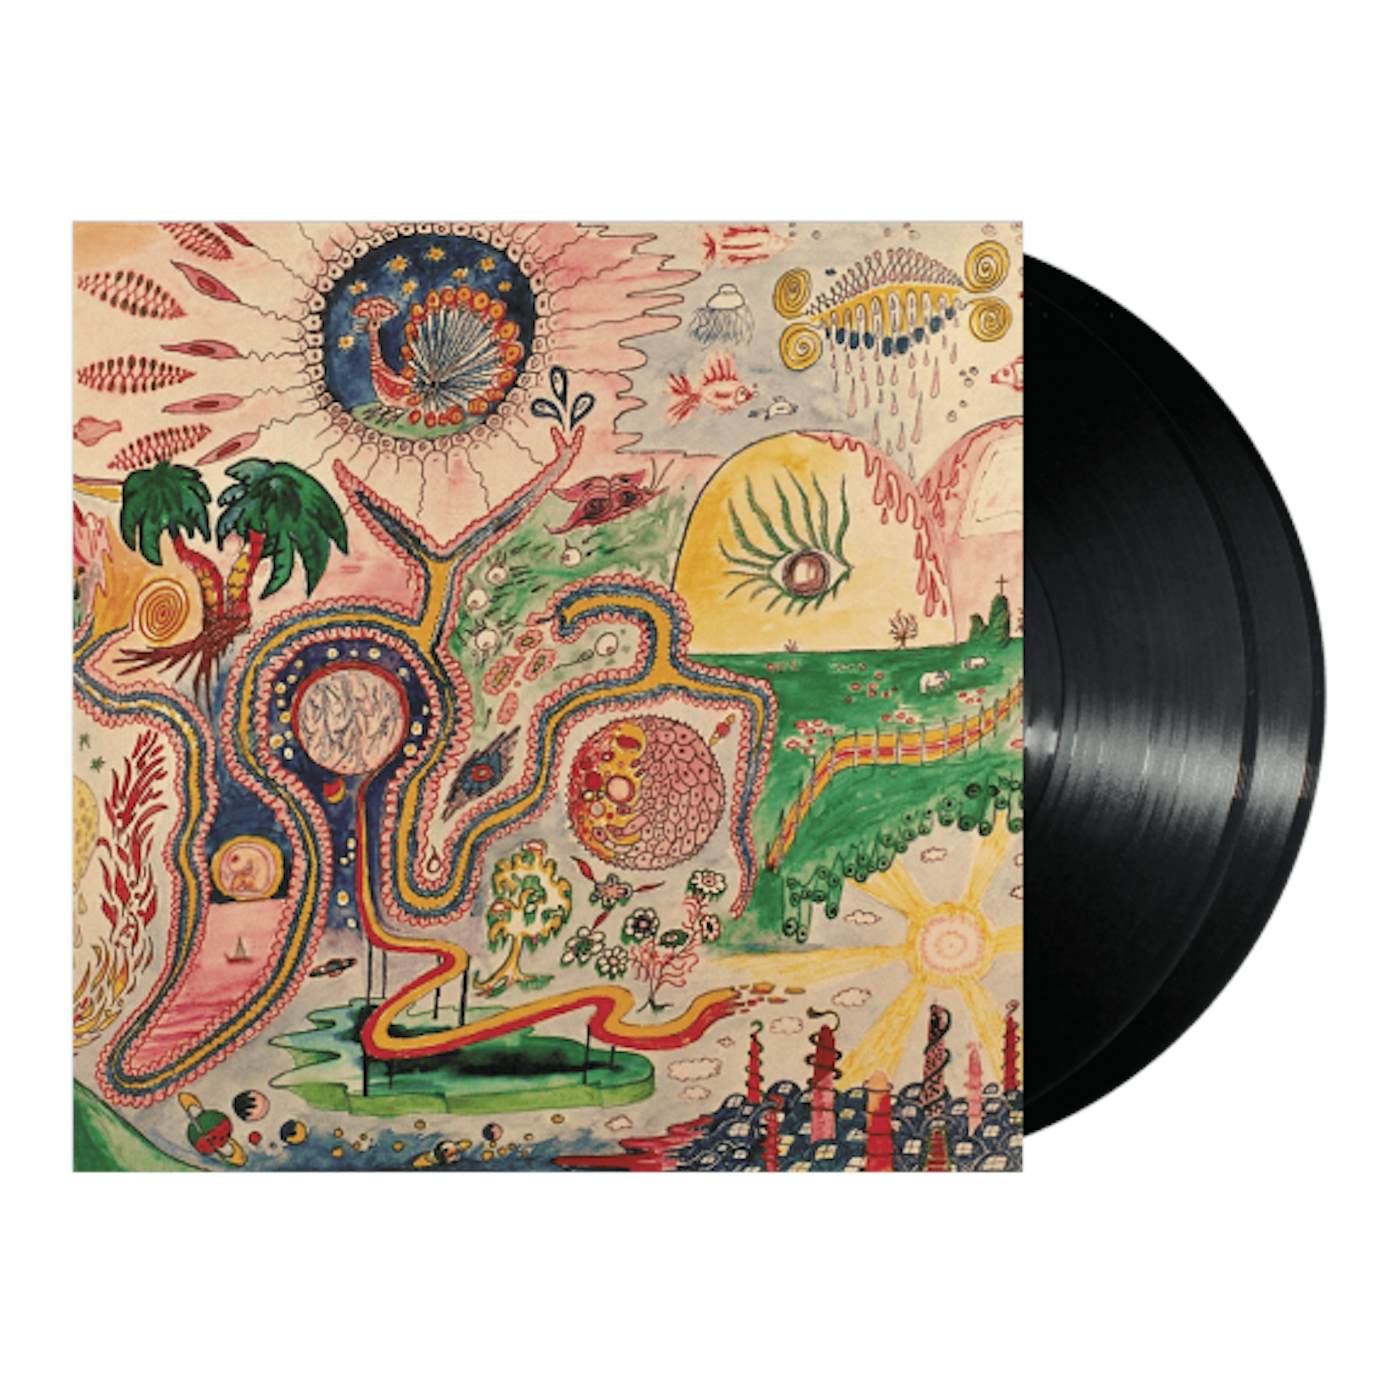 Youth Lagoon Wondrous Bughouse 2x12" Vinyl